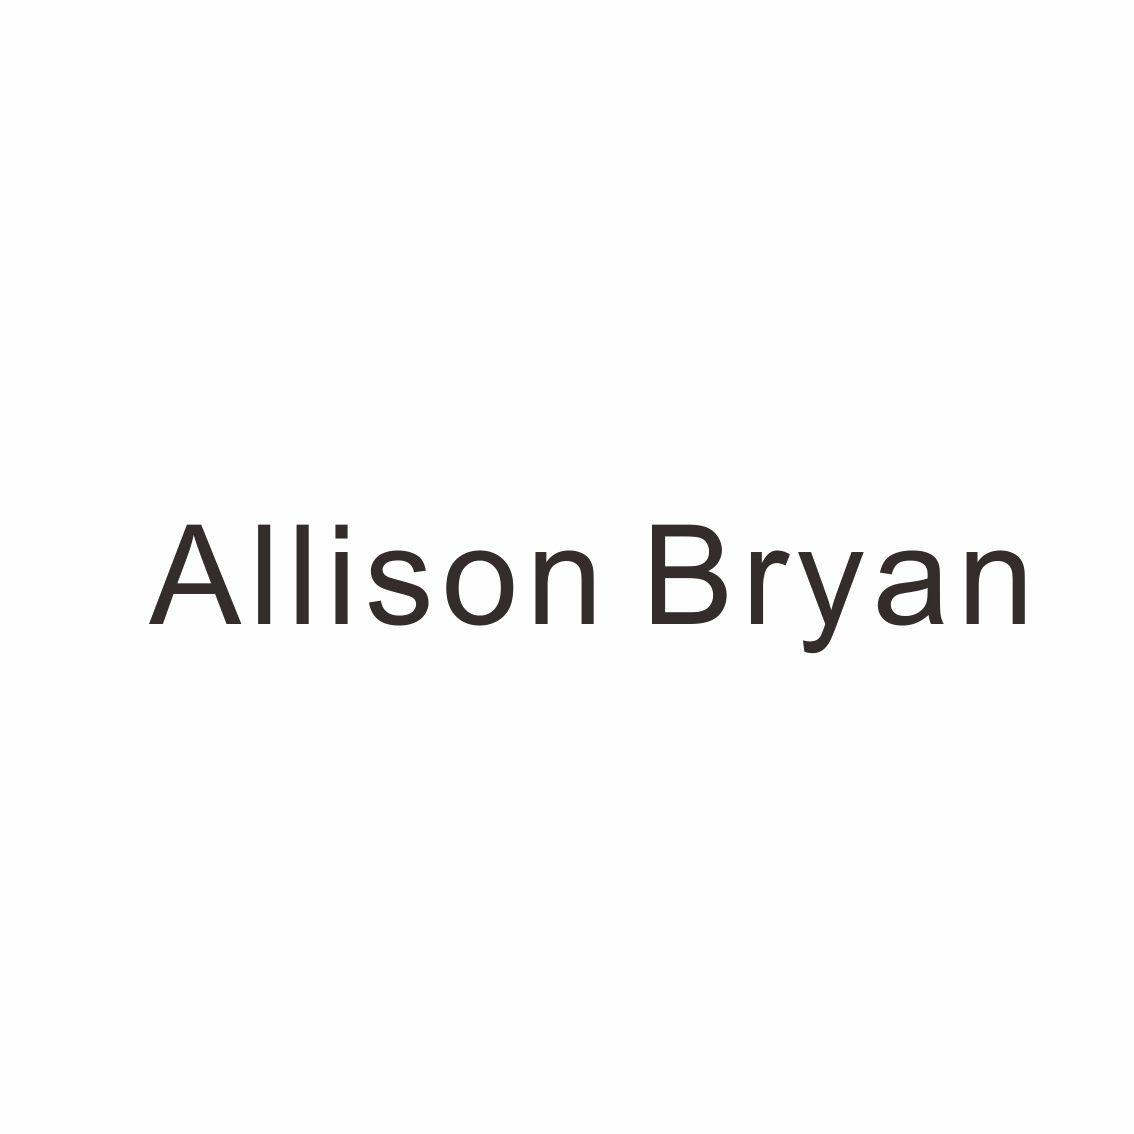 ALLISON BRYAN